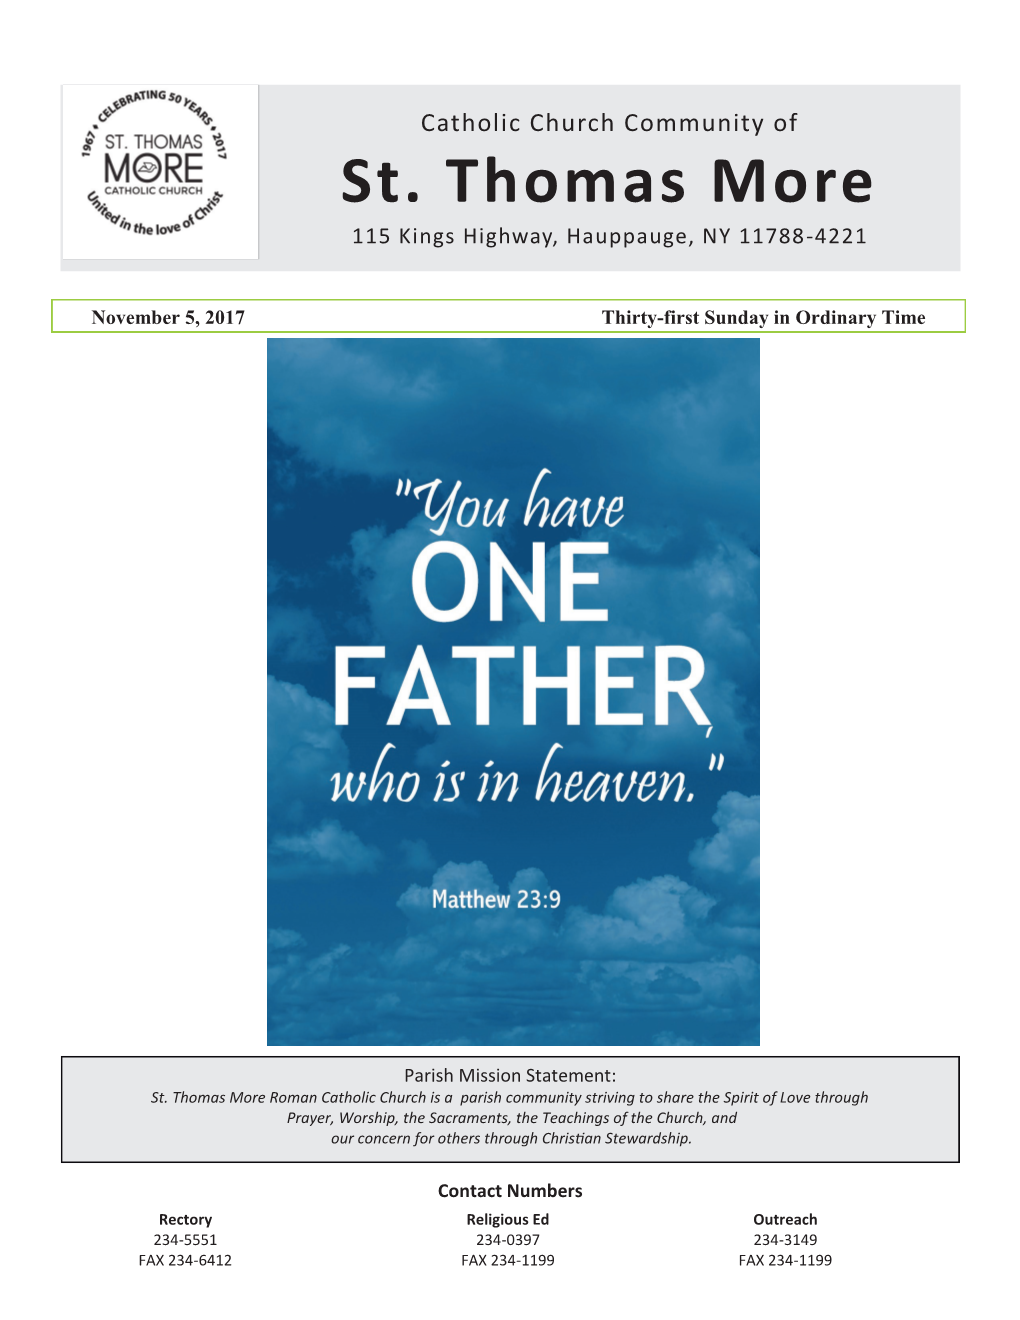 St. Thomas More Parish Outreach